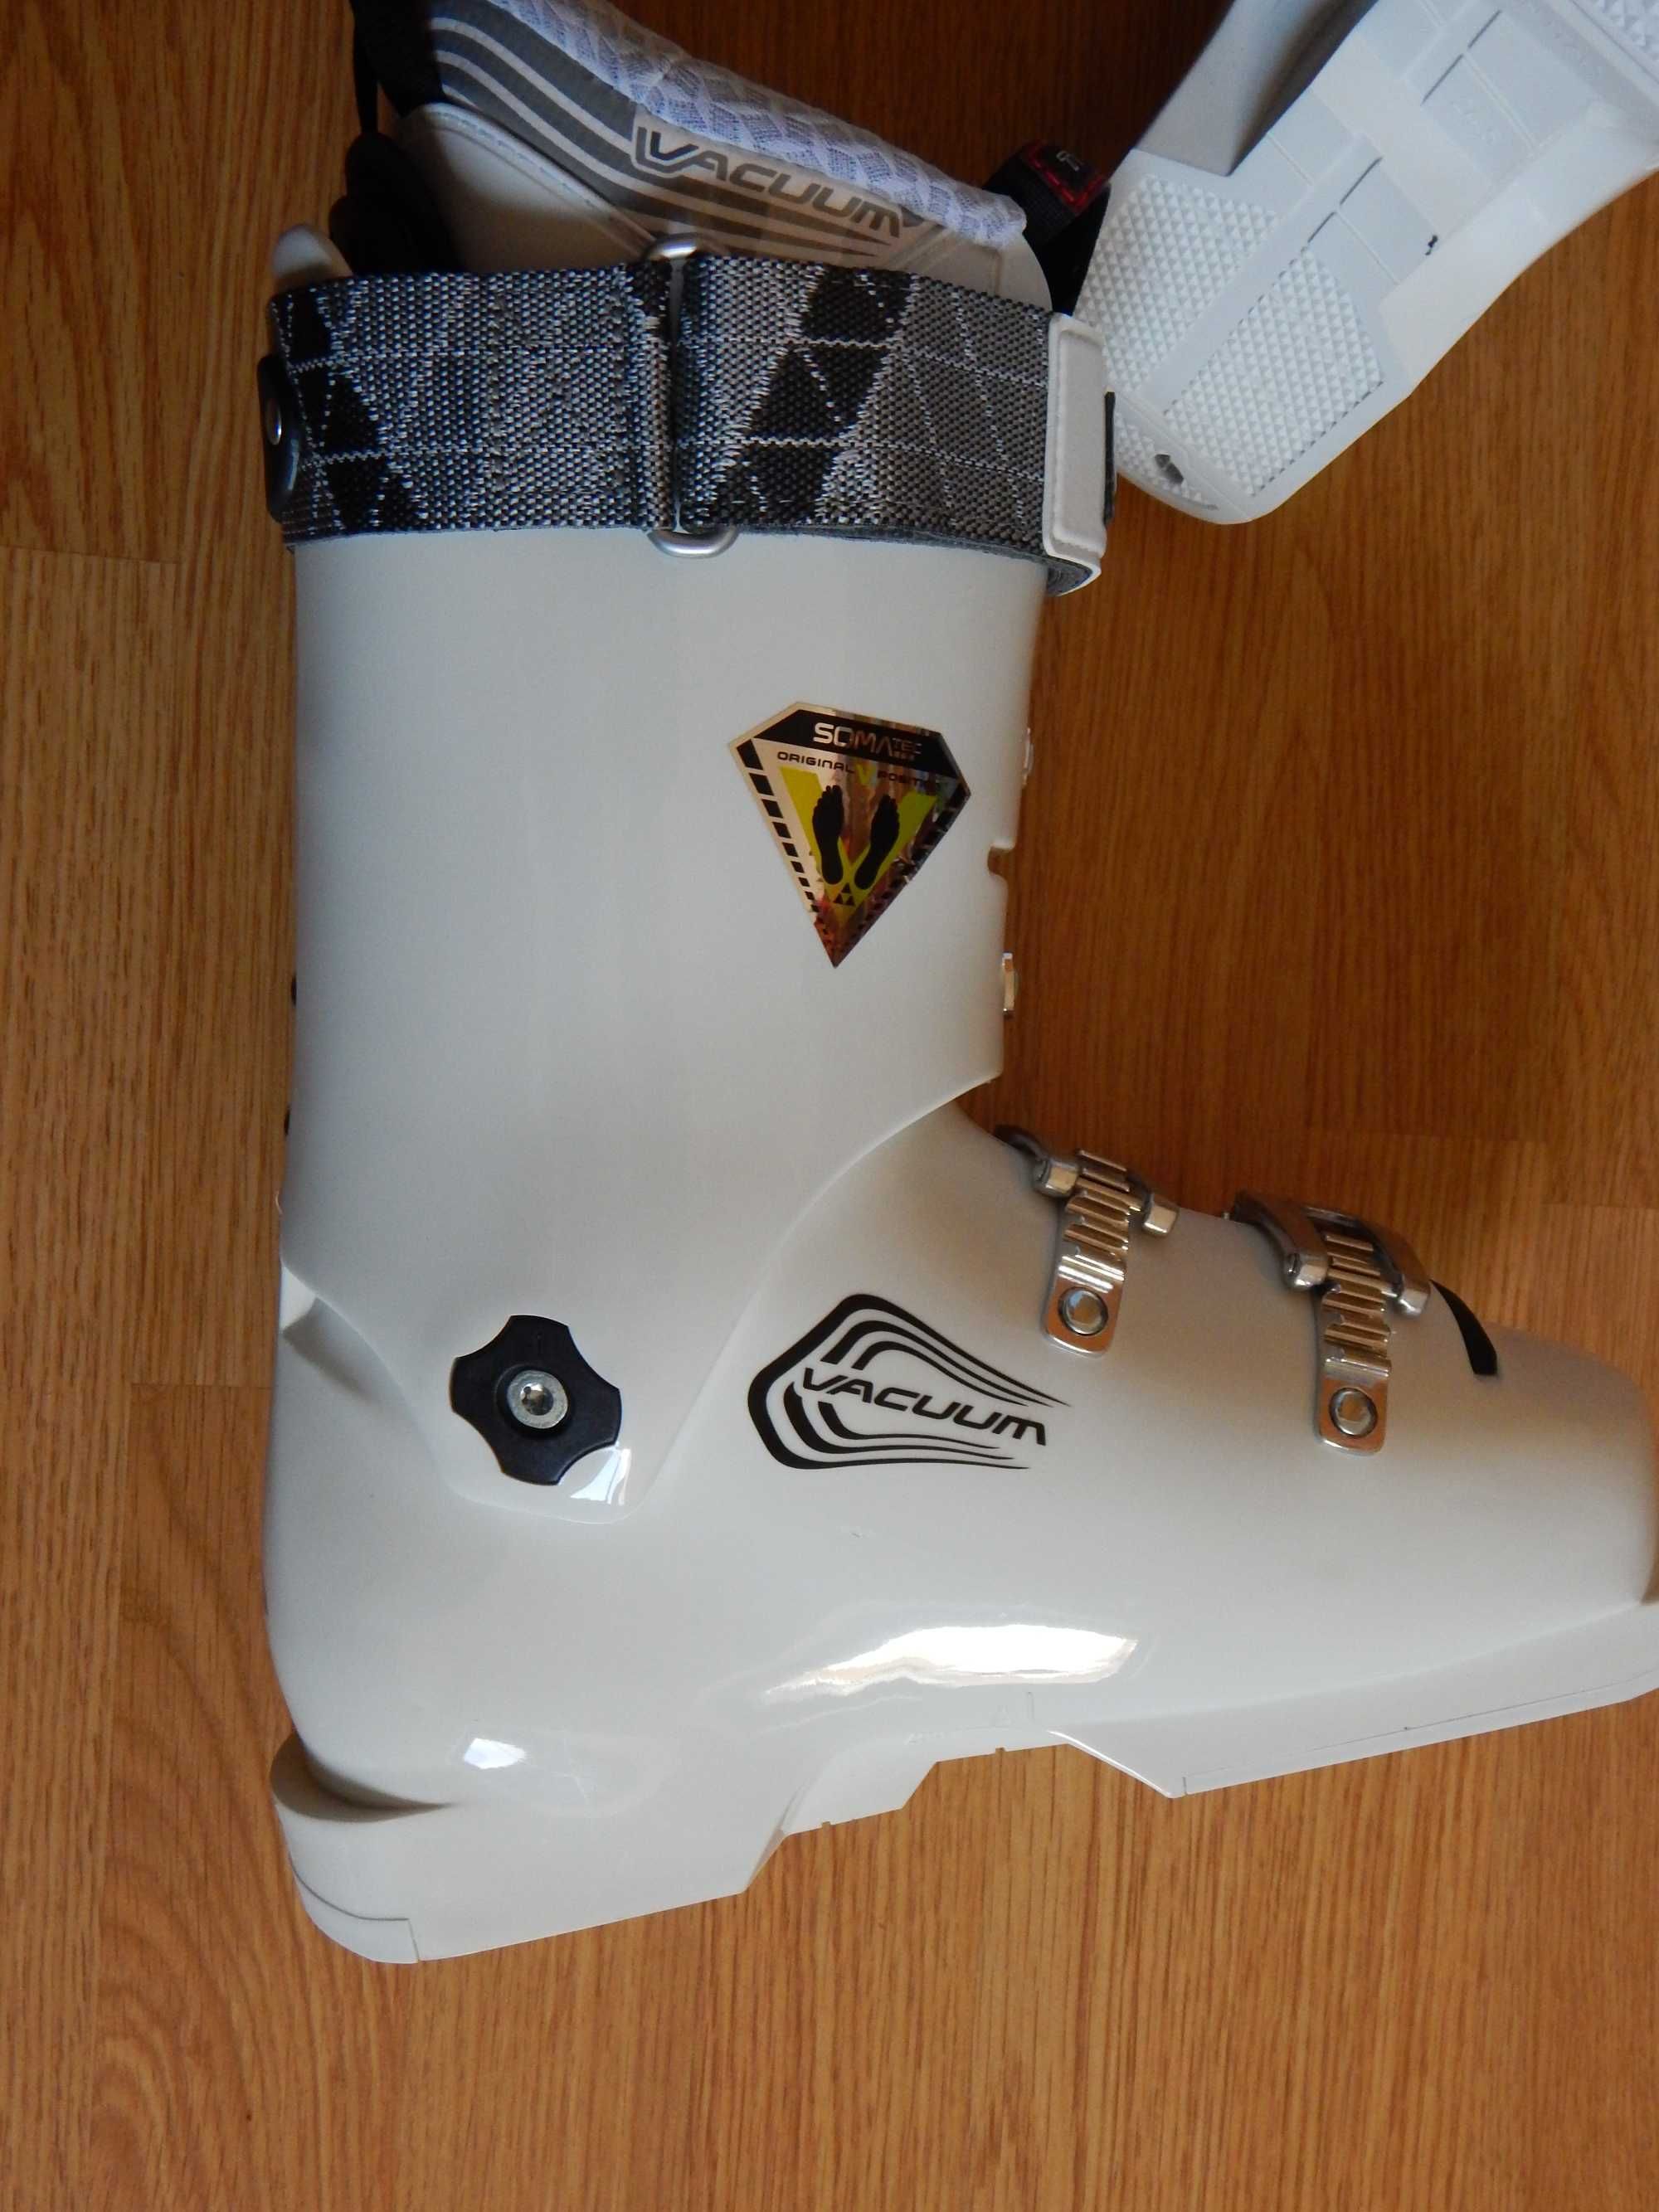 Fischer Alpine Trinity 110 Vacuum ski boots (botas de ski) novas